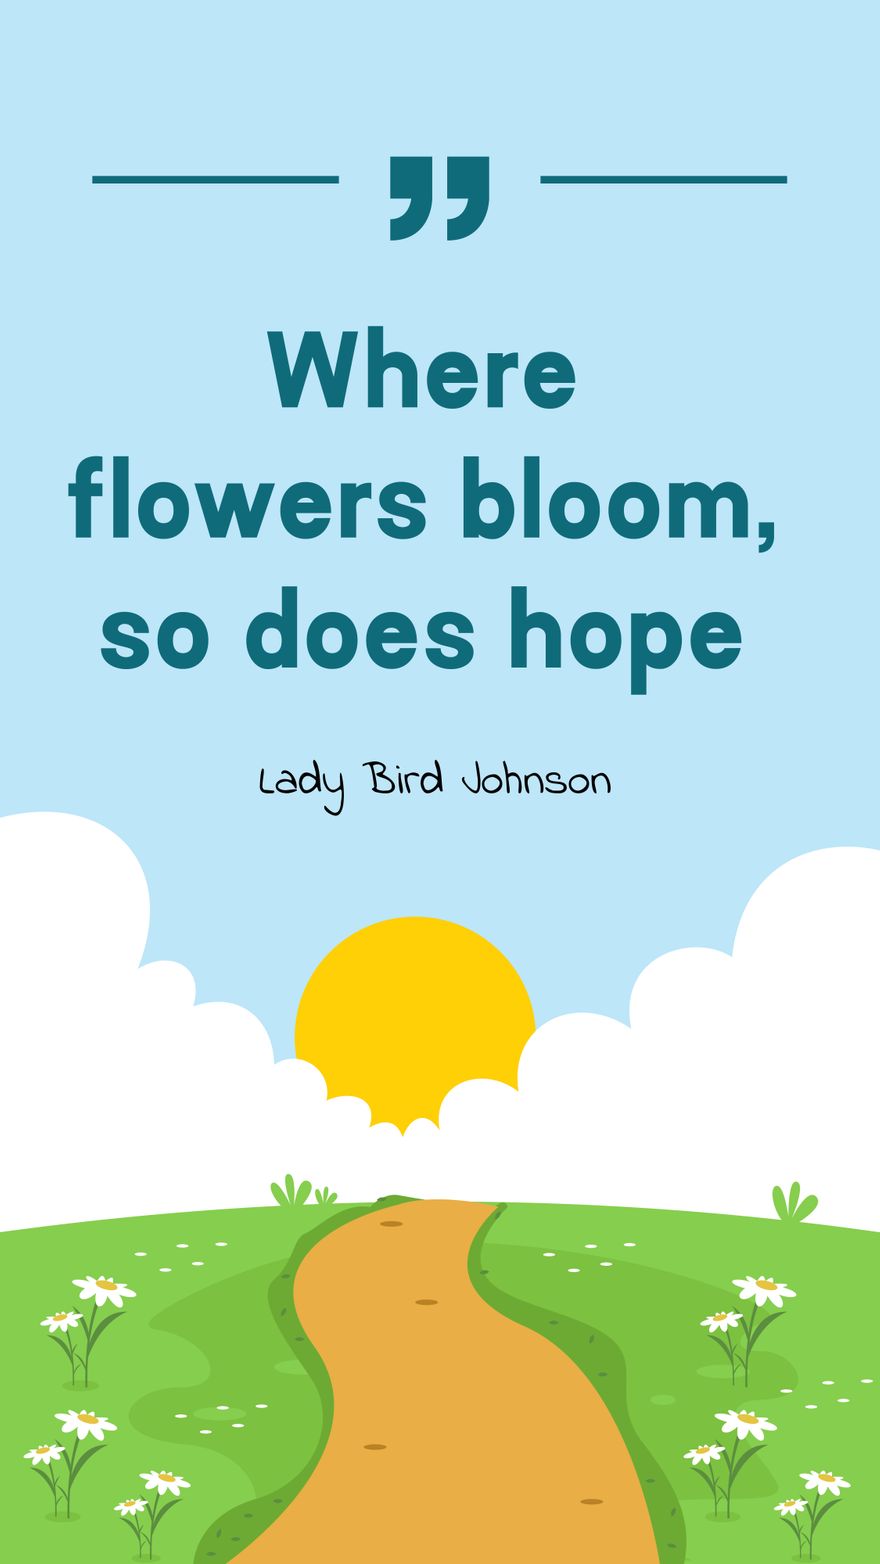 Lady Bird Johnson - Where flowers bloom, so does hope. in JPG